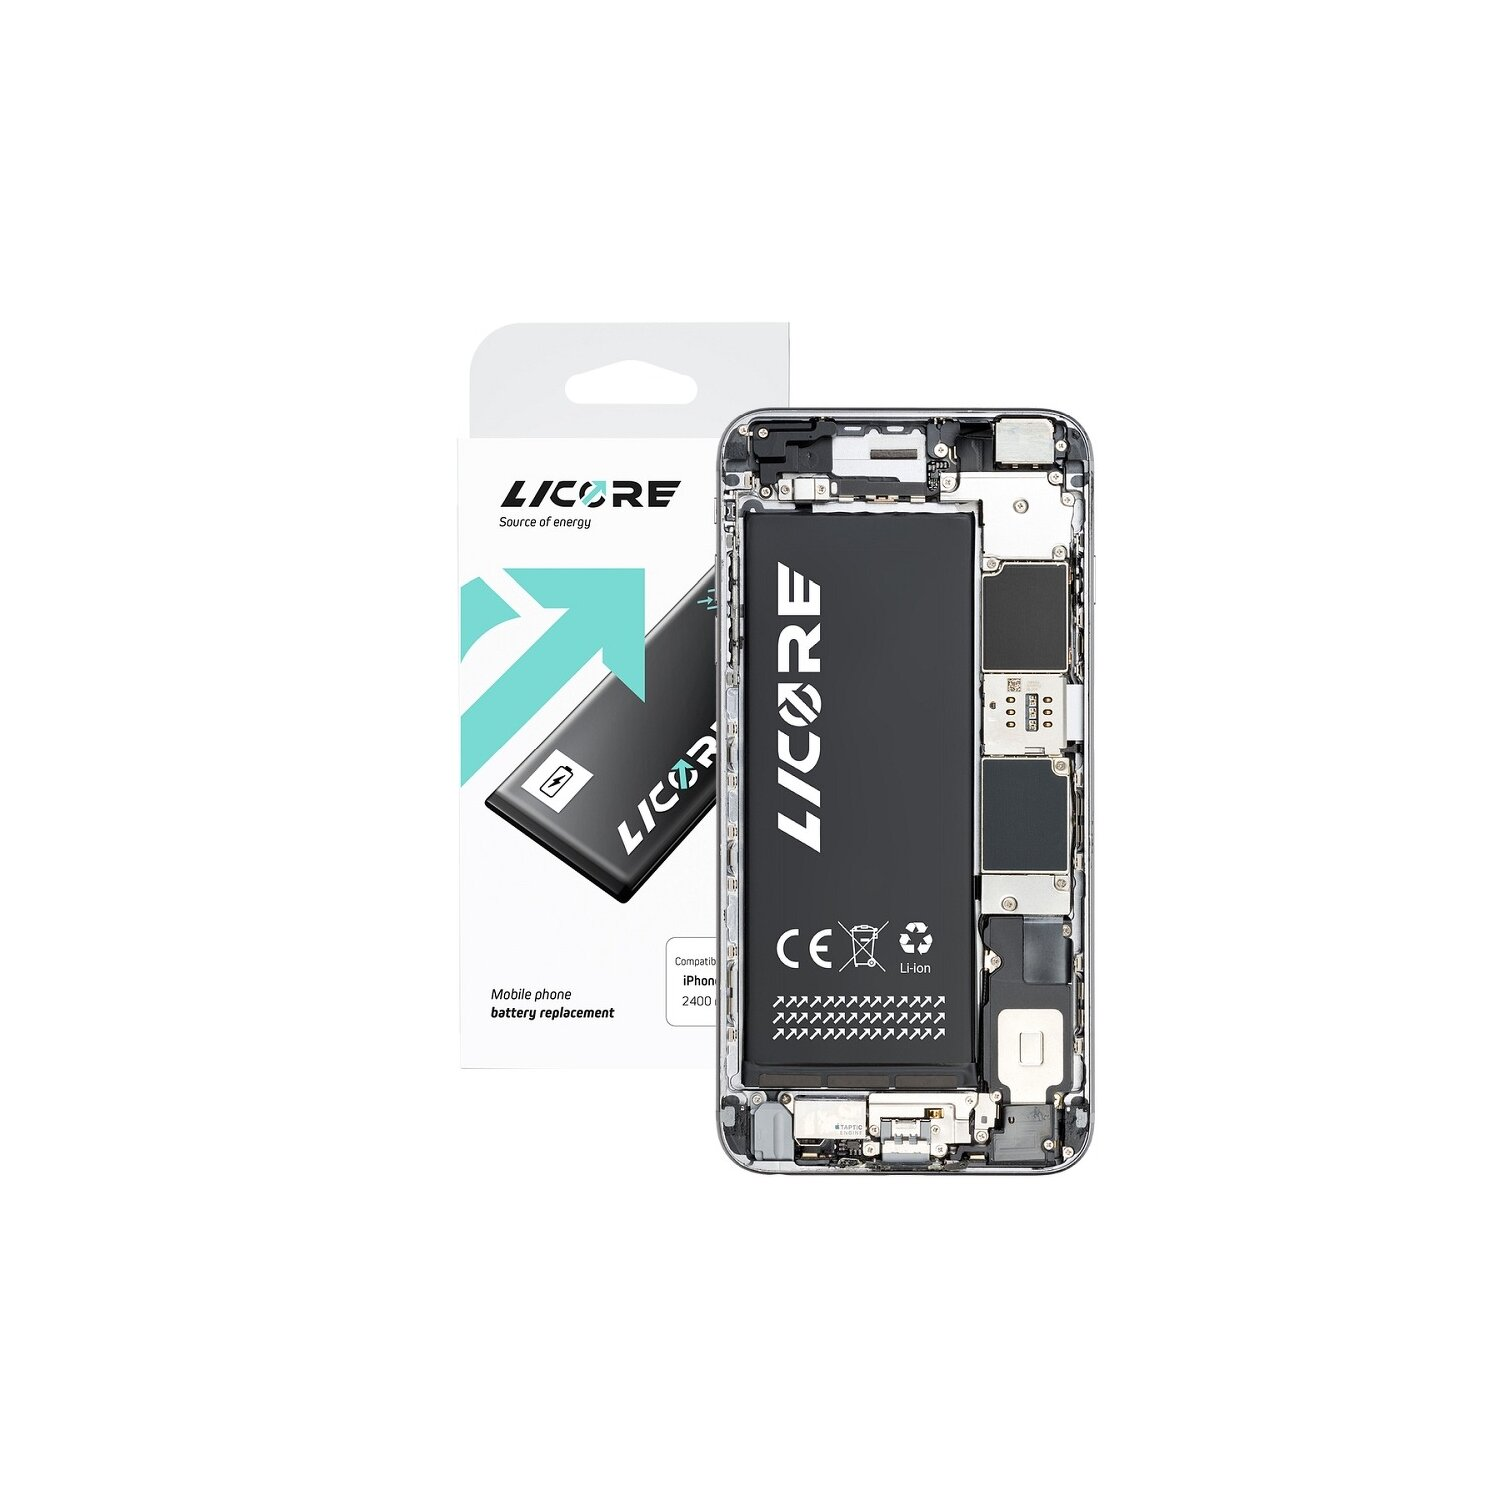 Akku 4s Licore kompatibel mit COFI li-Ion Ersatz iPhone Akku 1430mAh